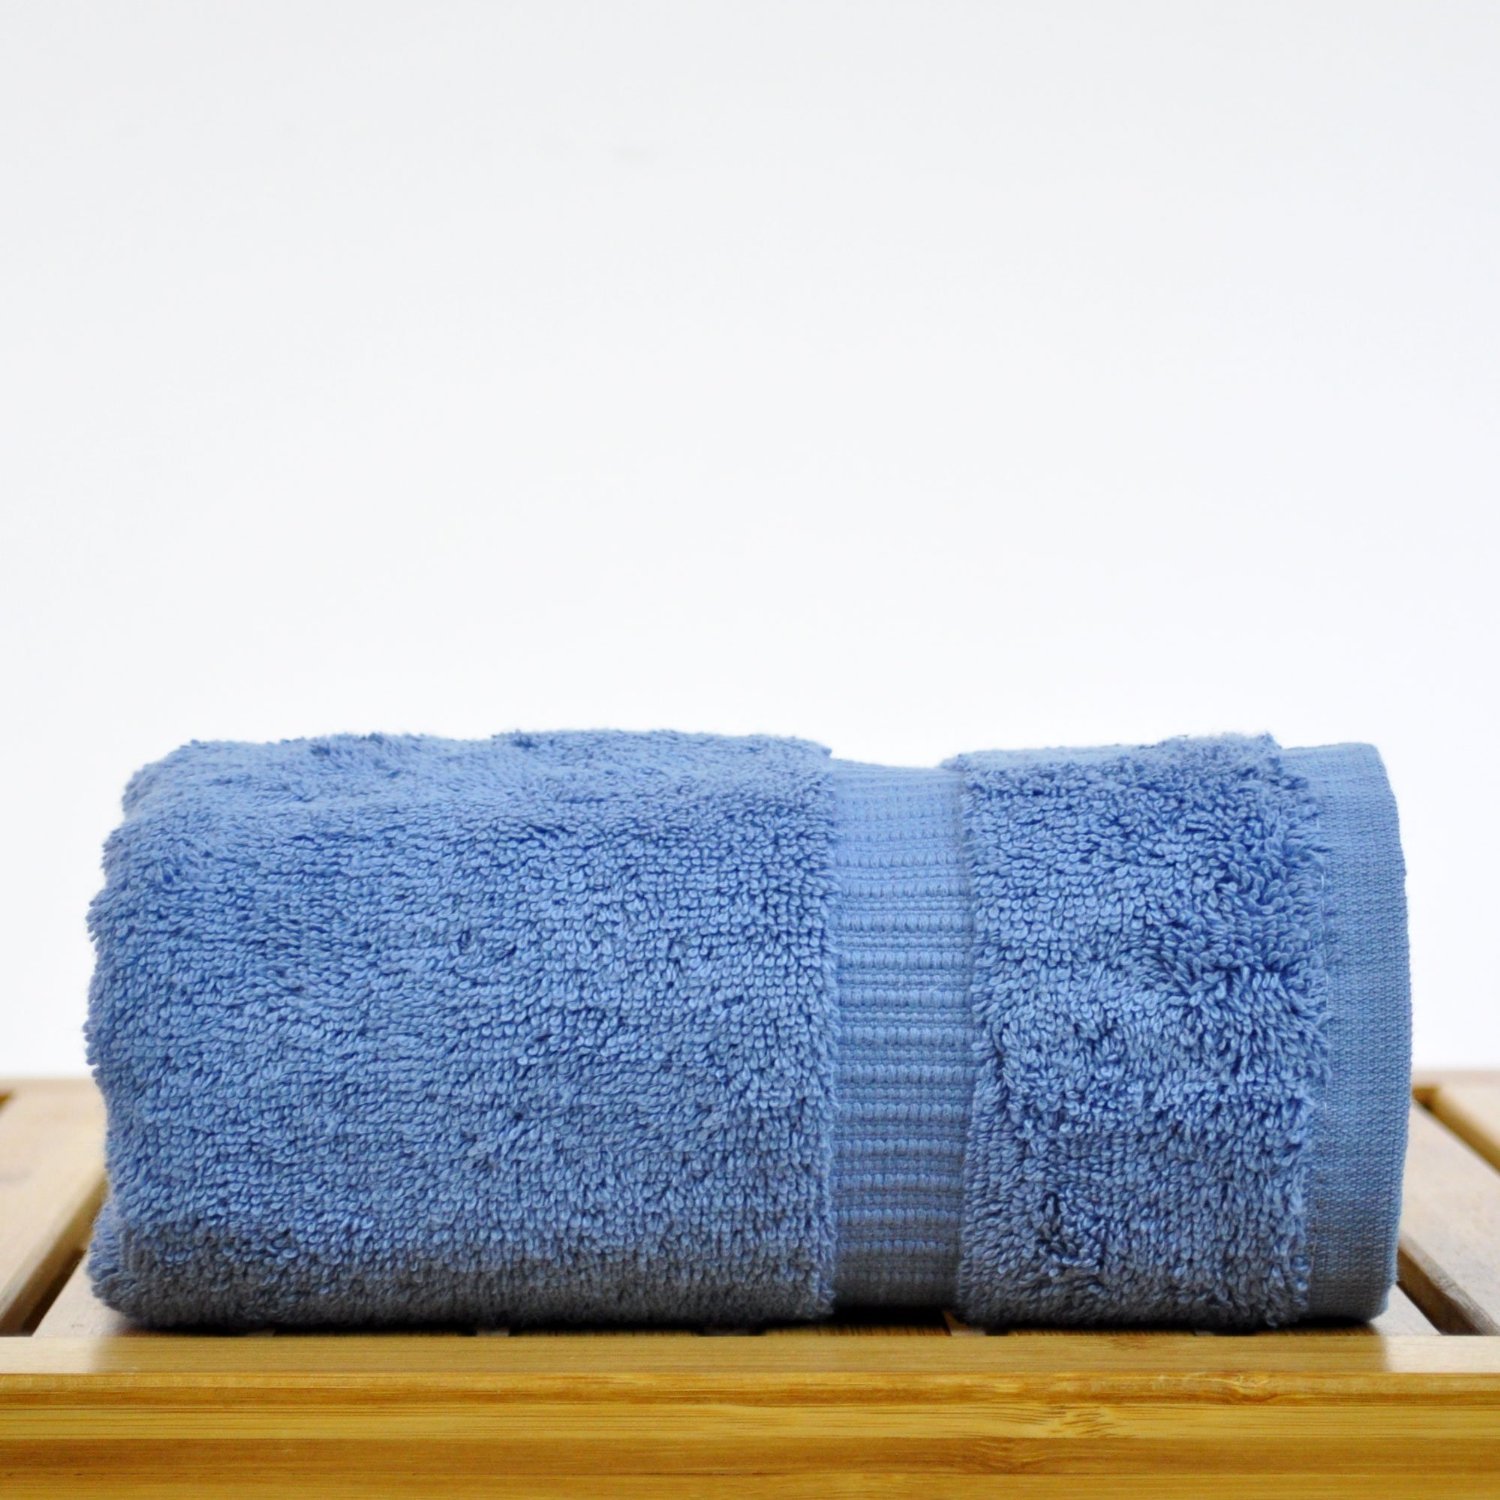 16" x 30" - 5.5 lbs/doz - %100 Turkish Cotton Wedgewood Hand Towel - Dobby Border-Robemart.com